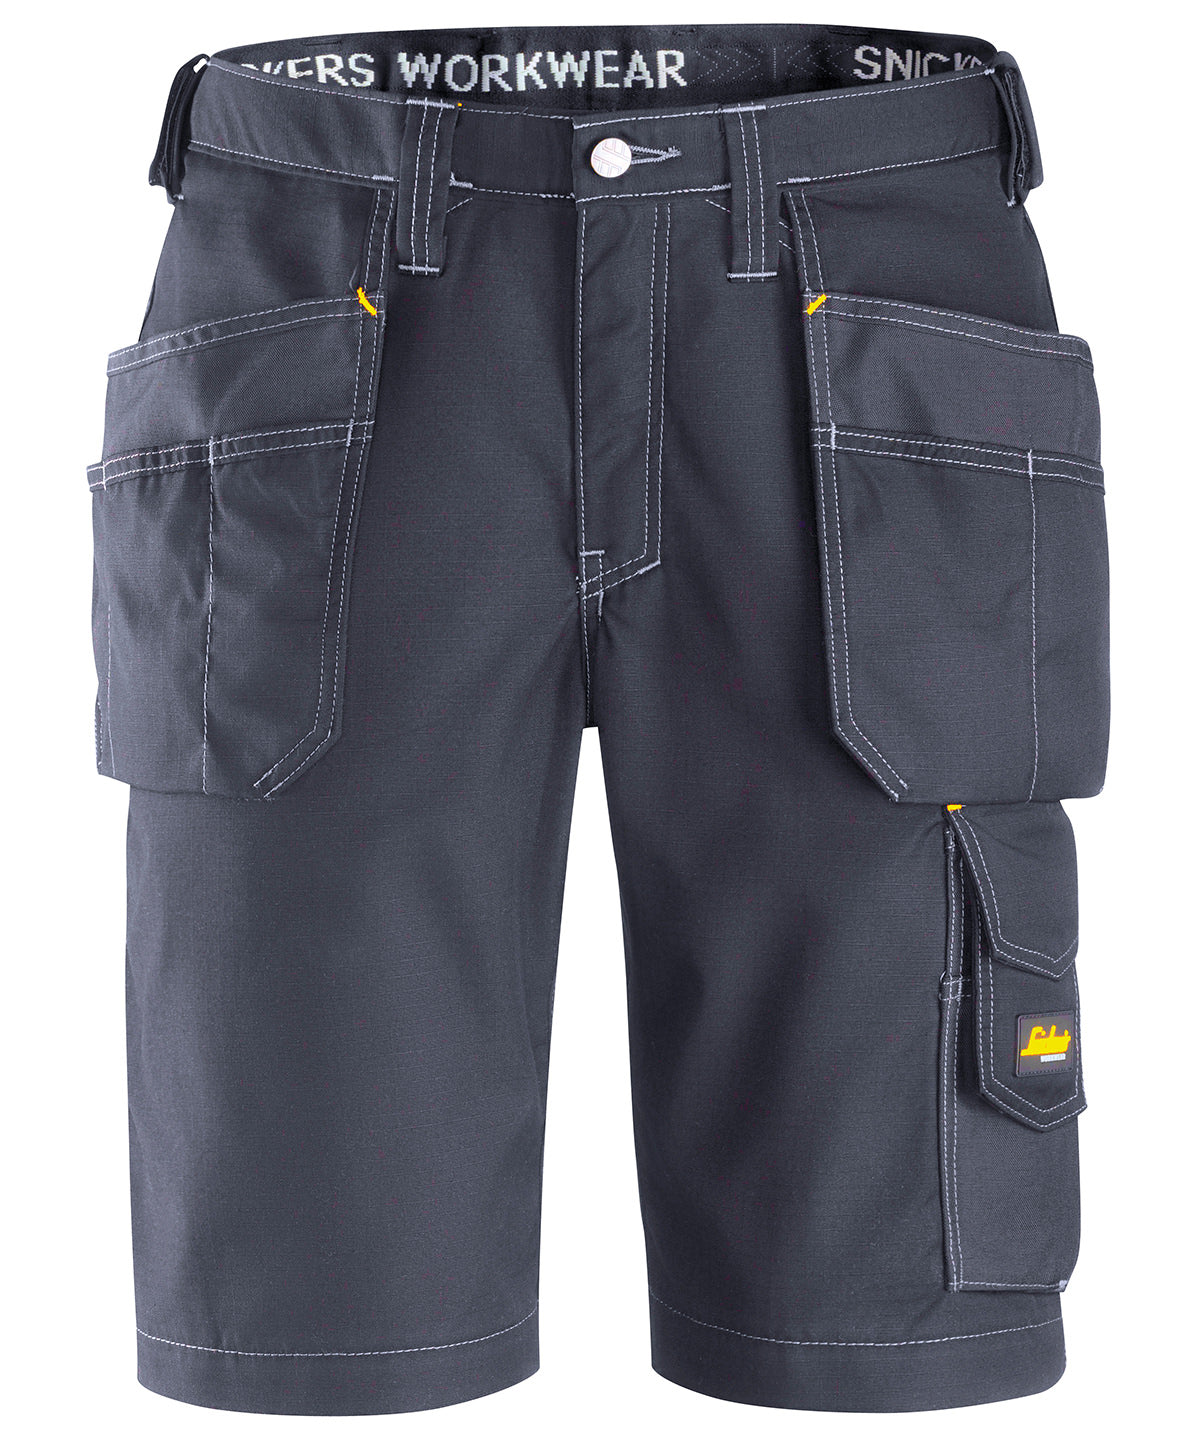 Stuttbuxur - Craftsmen Ripstop Holster Pocket Shorts